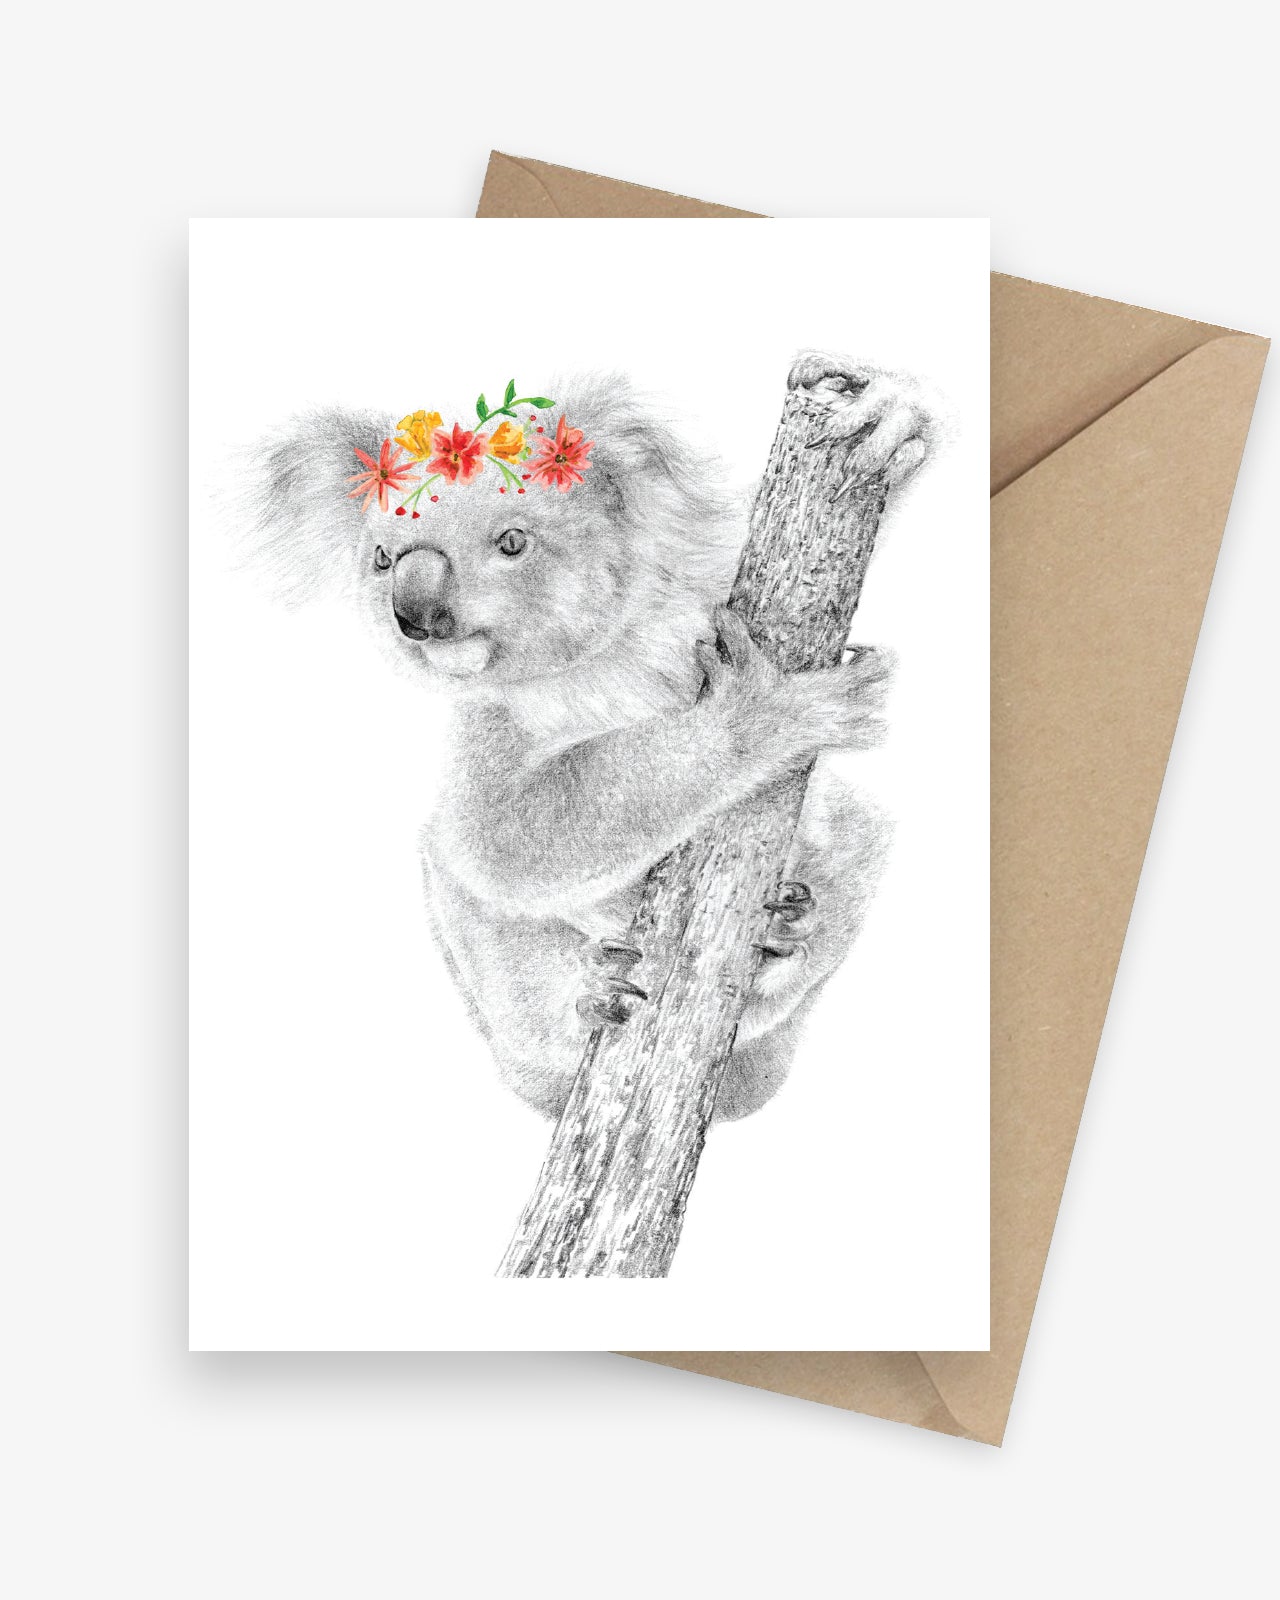 Greeting card featuring an Australian native koala with a flower crown.